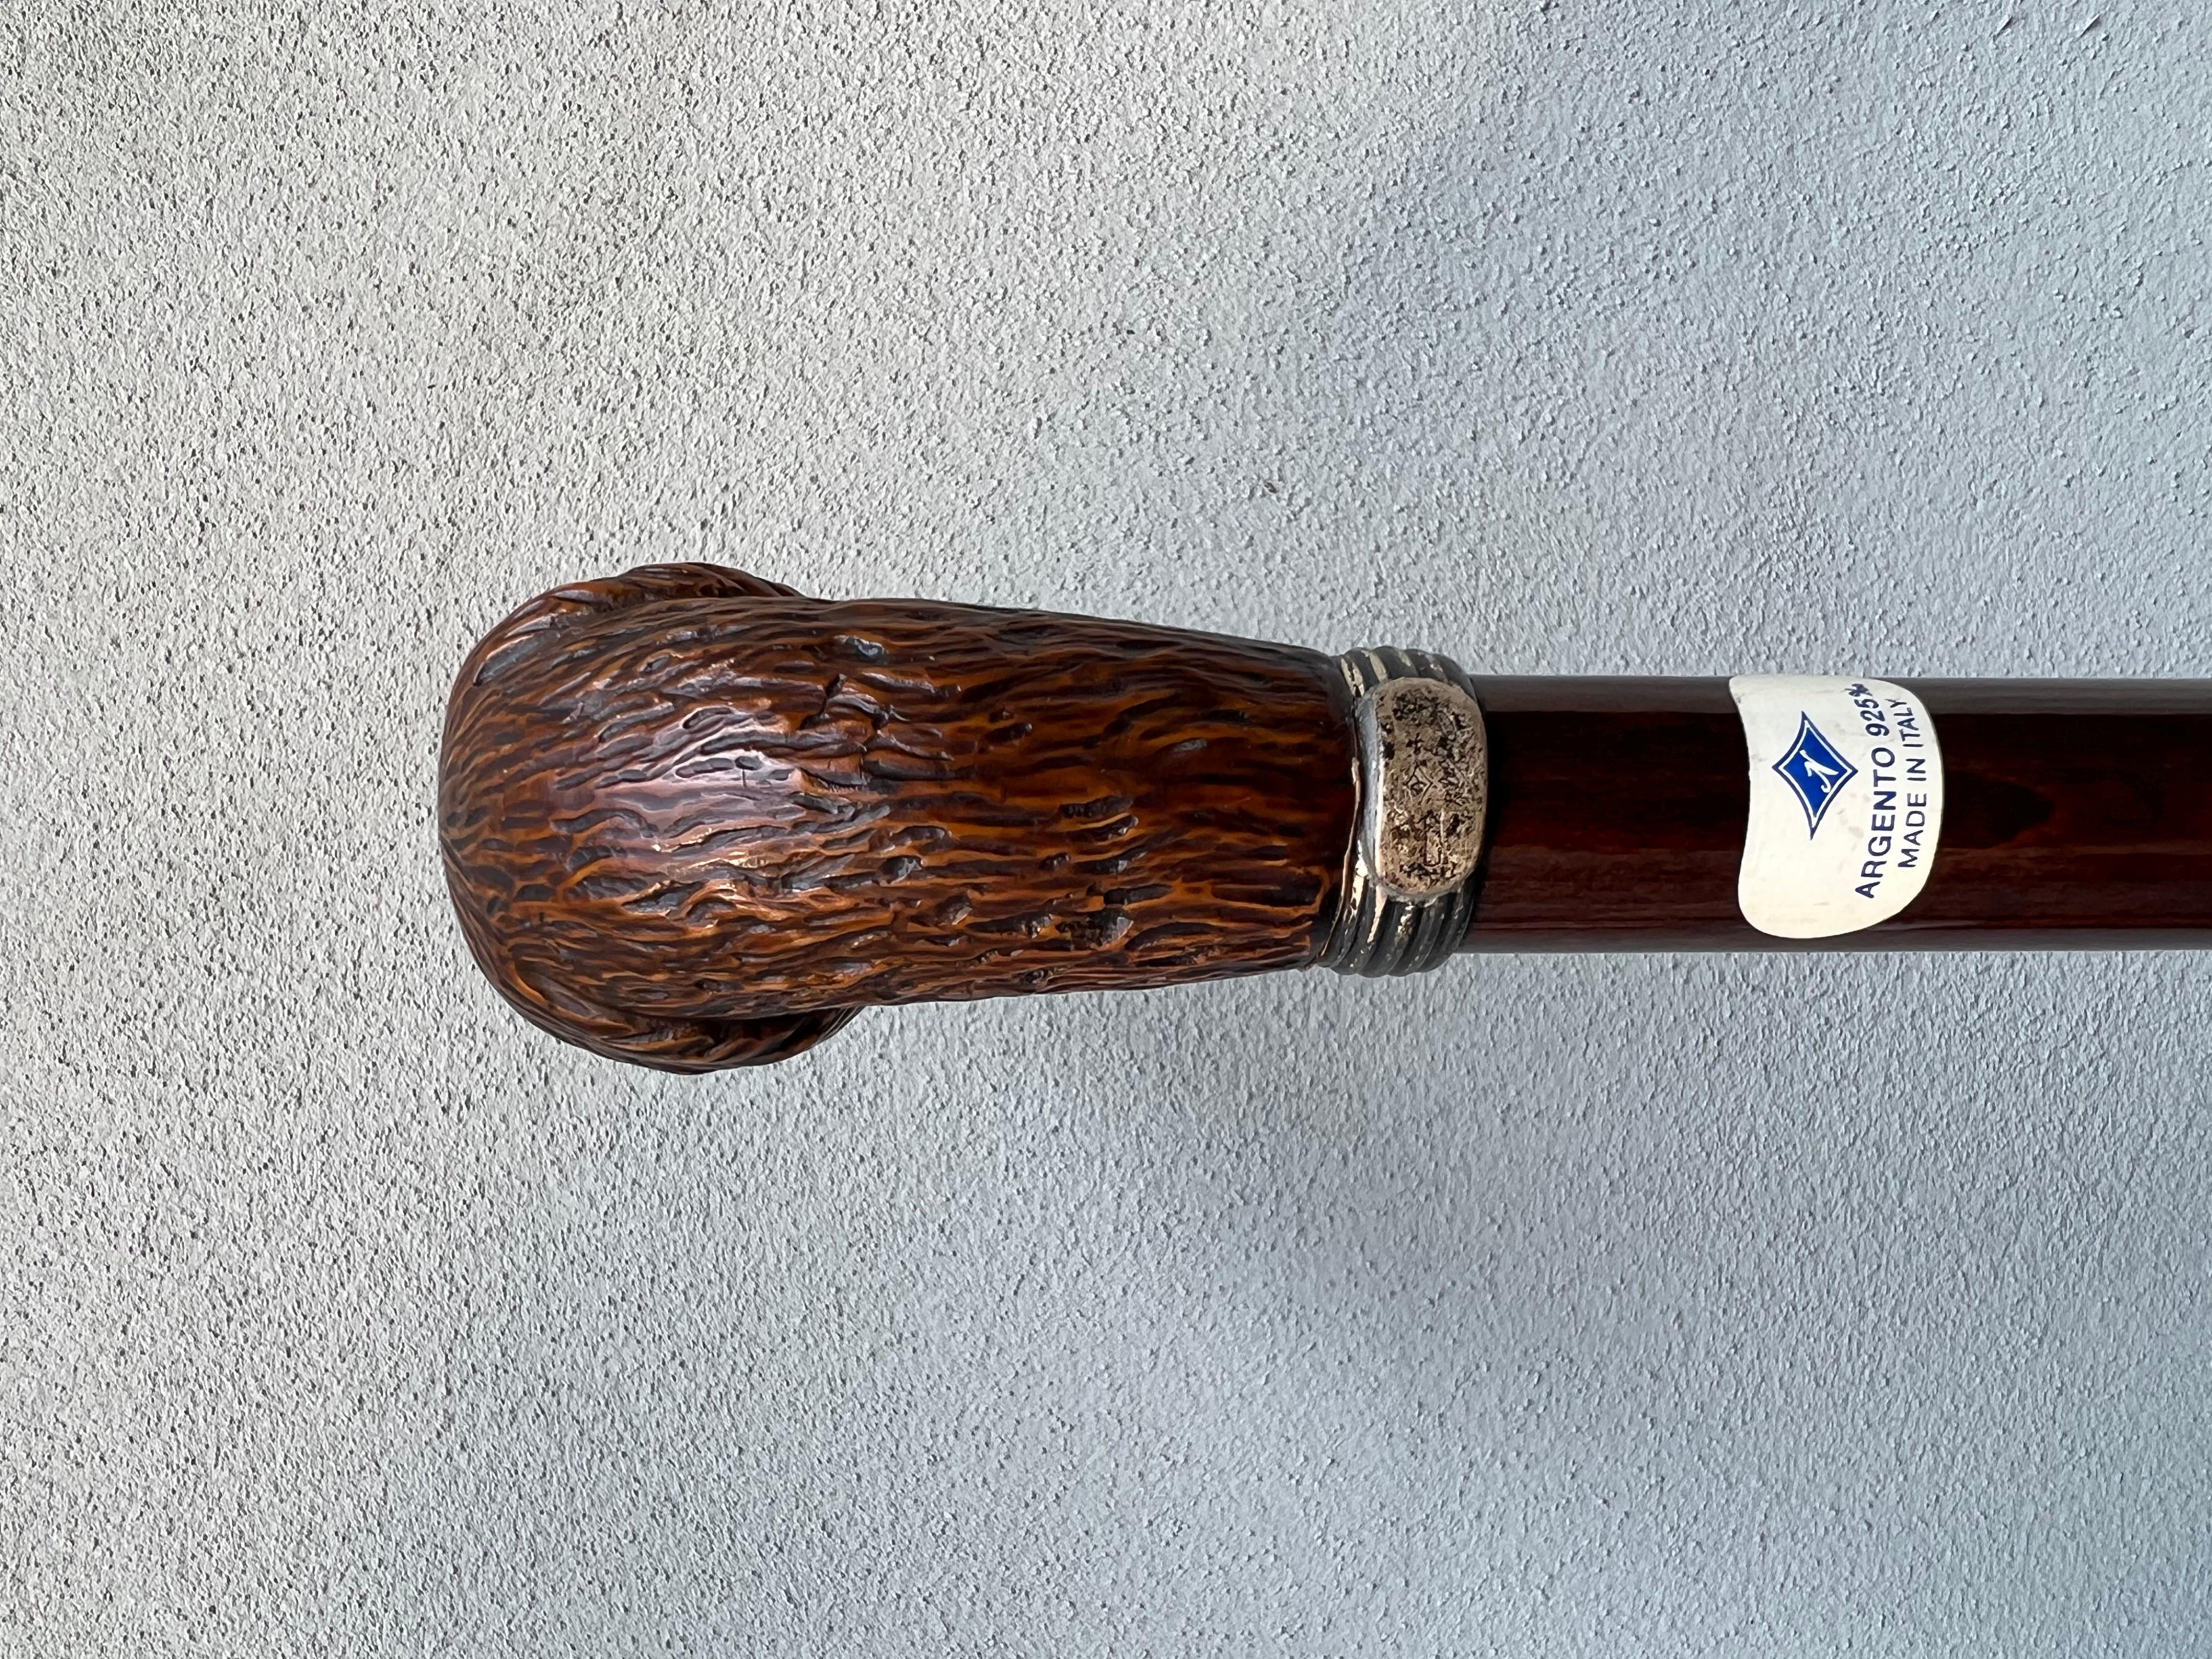 20th Century bastone - bastone animali - bastone testa cane - stick - wood stick - vintage For Sale